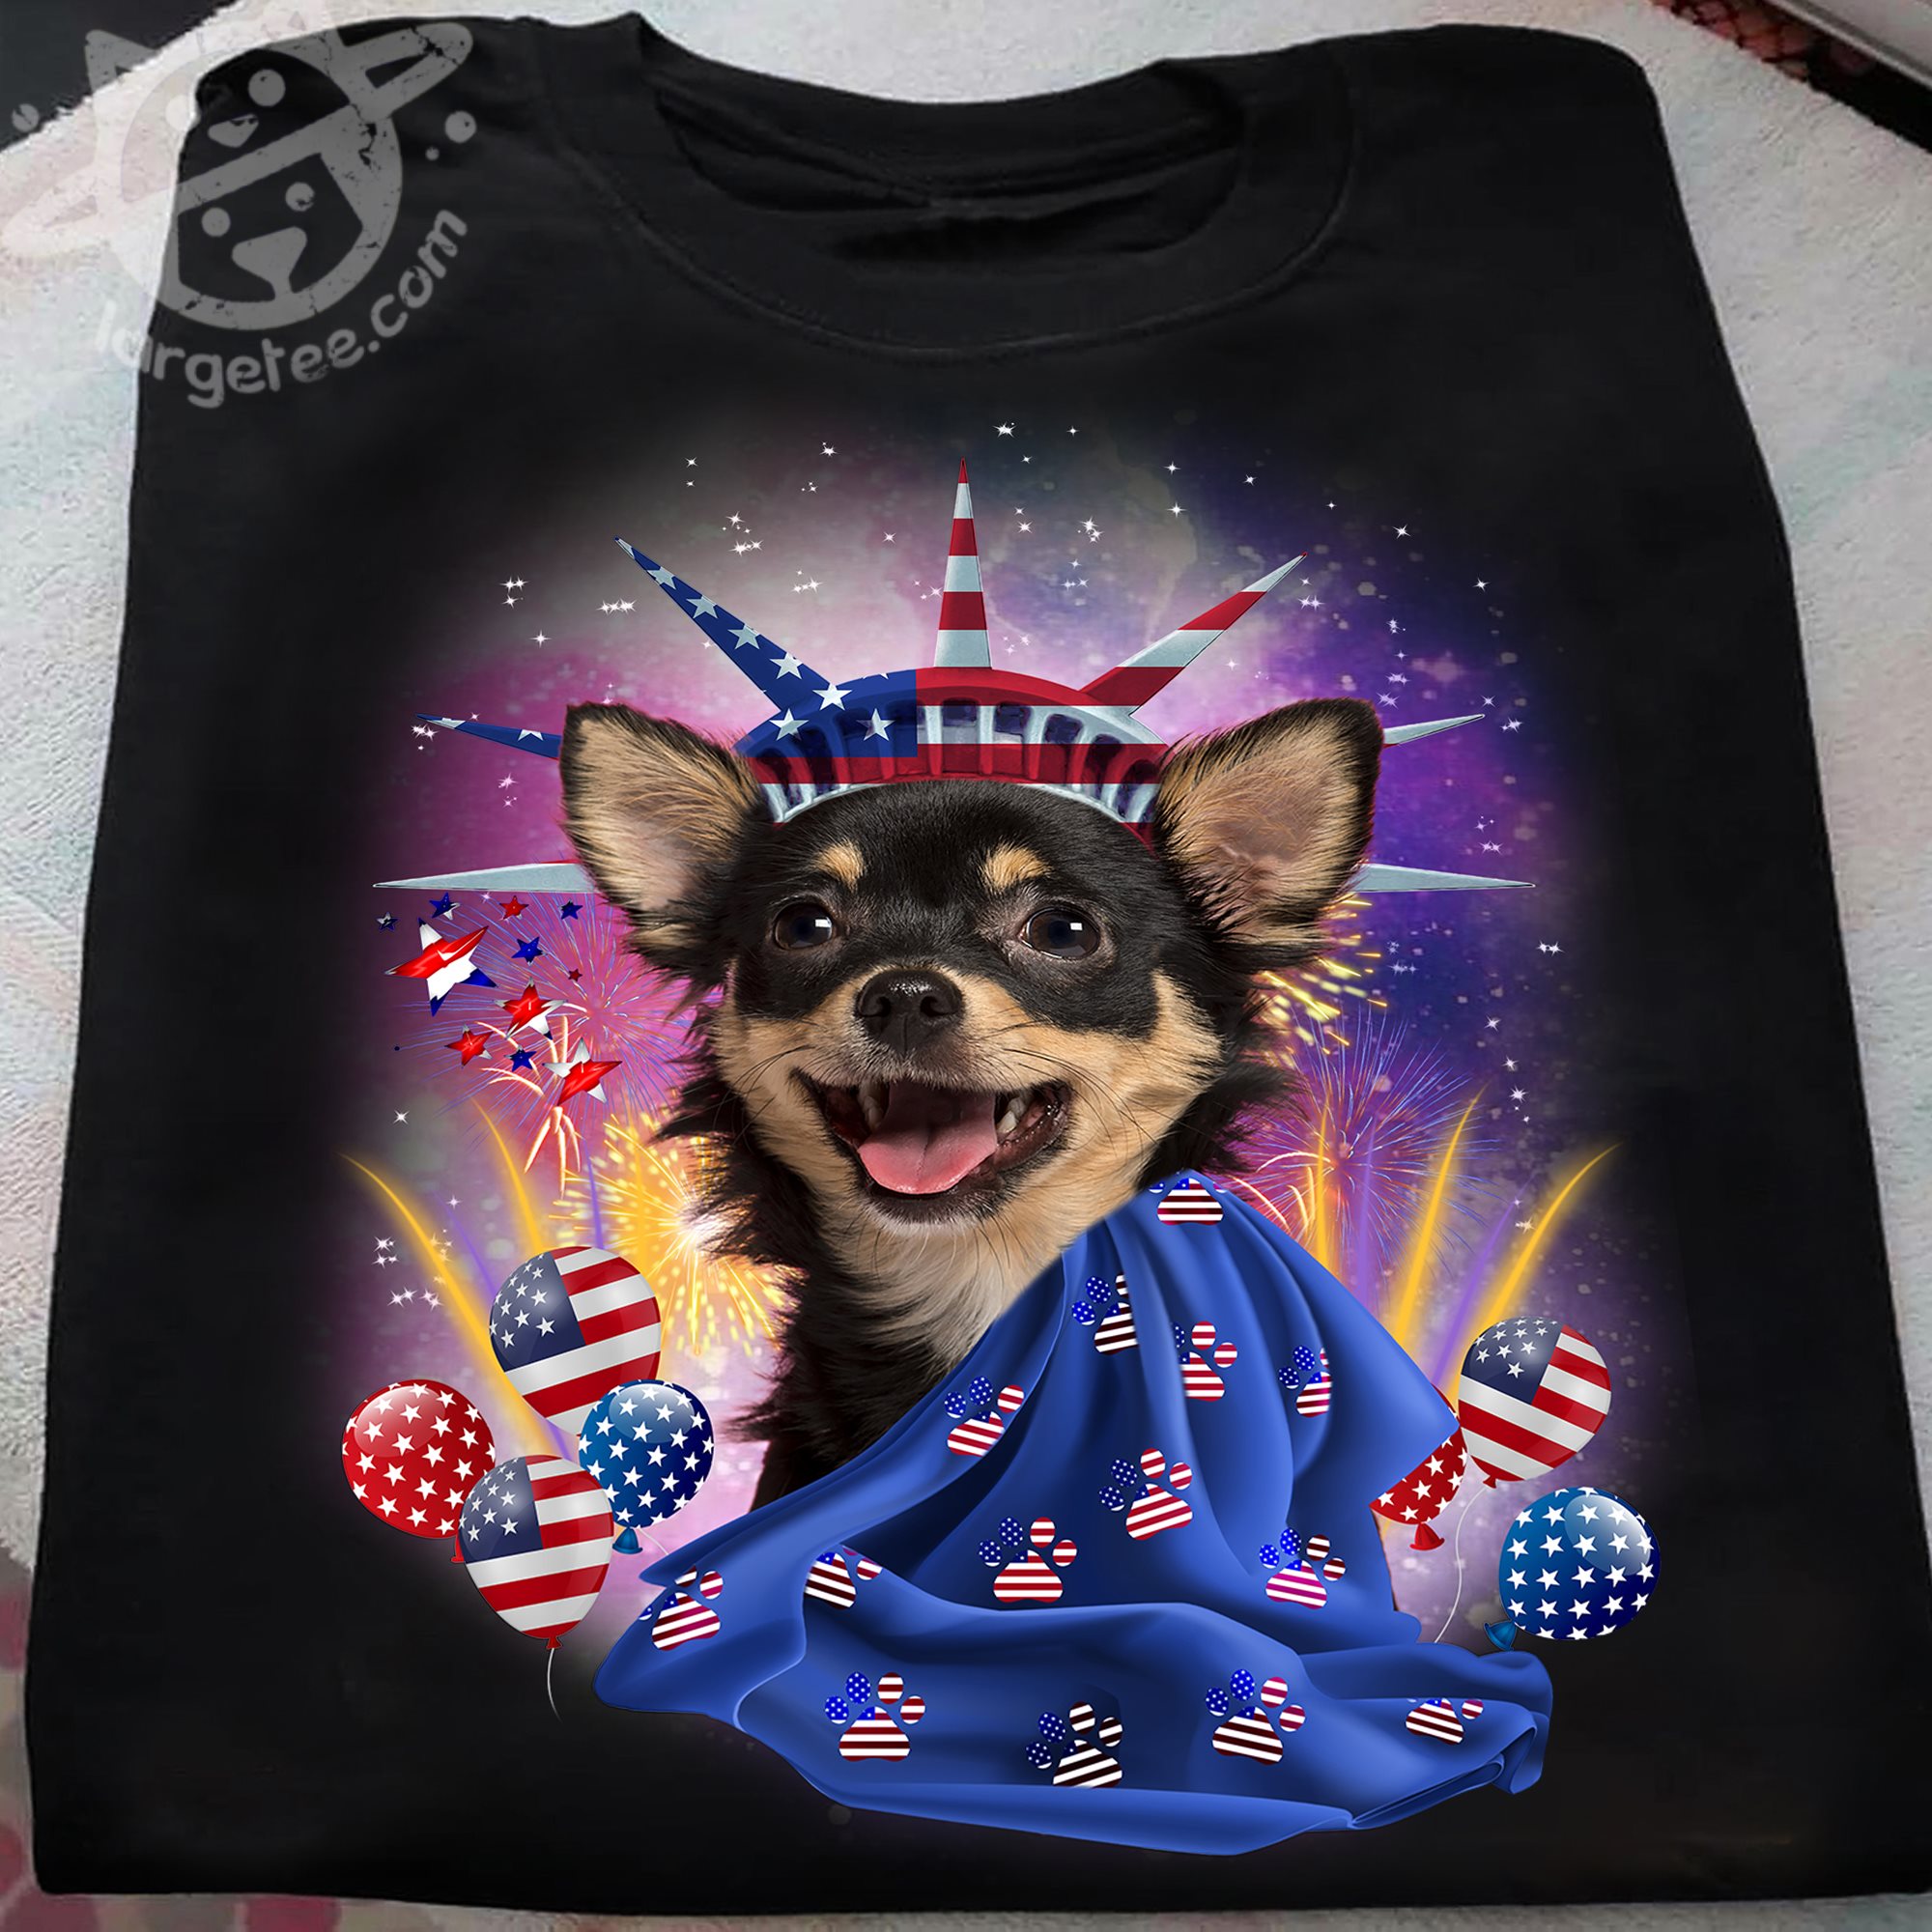 Chihuahua dog - America flag, statue of Liberty